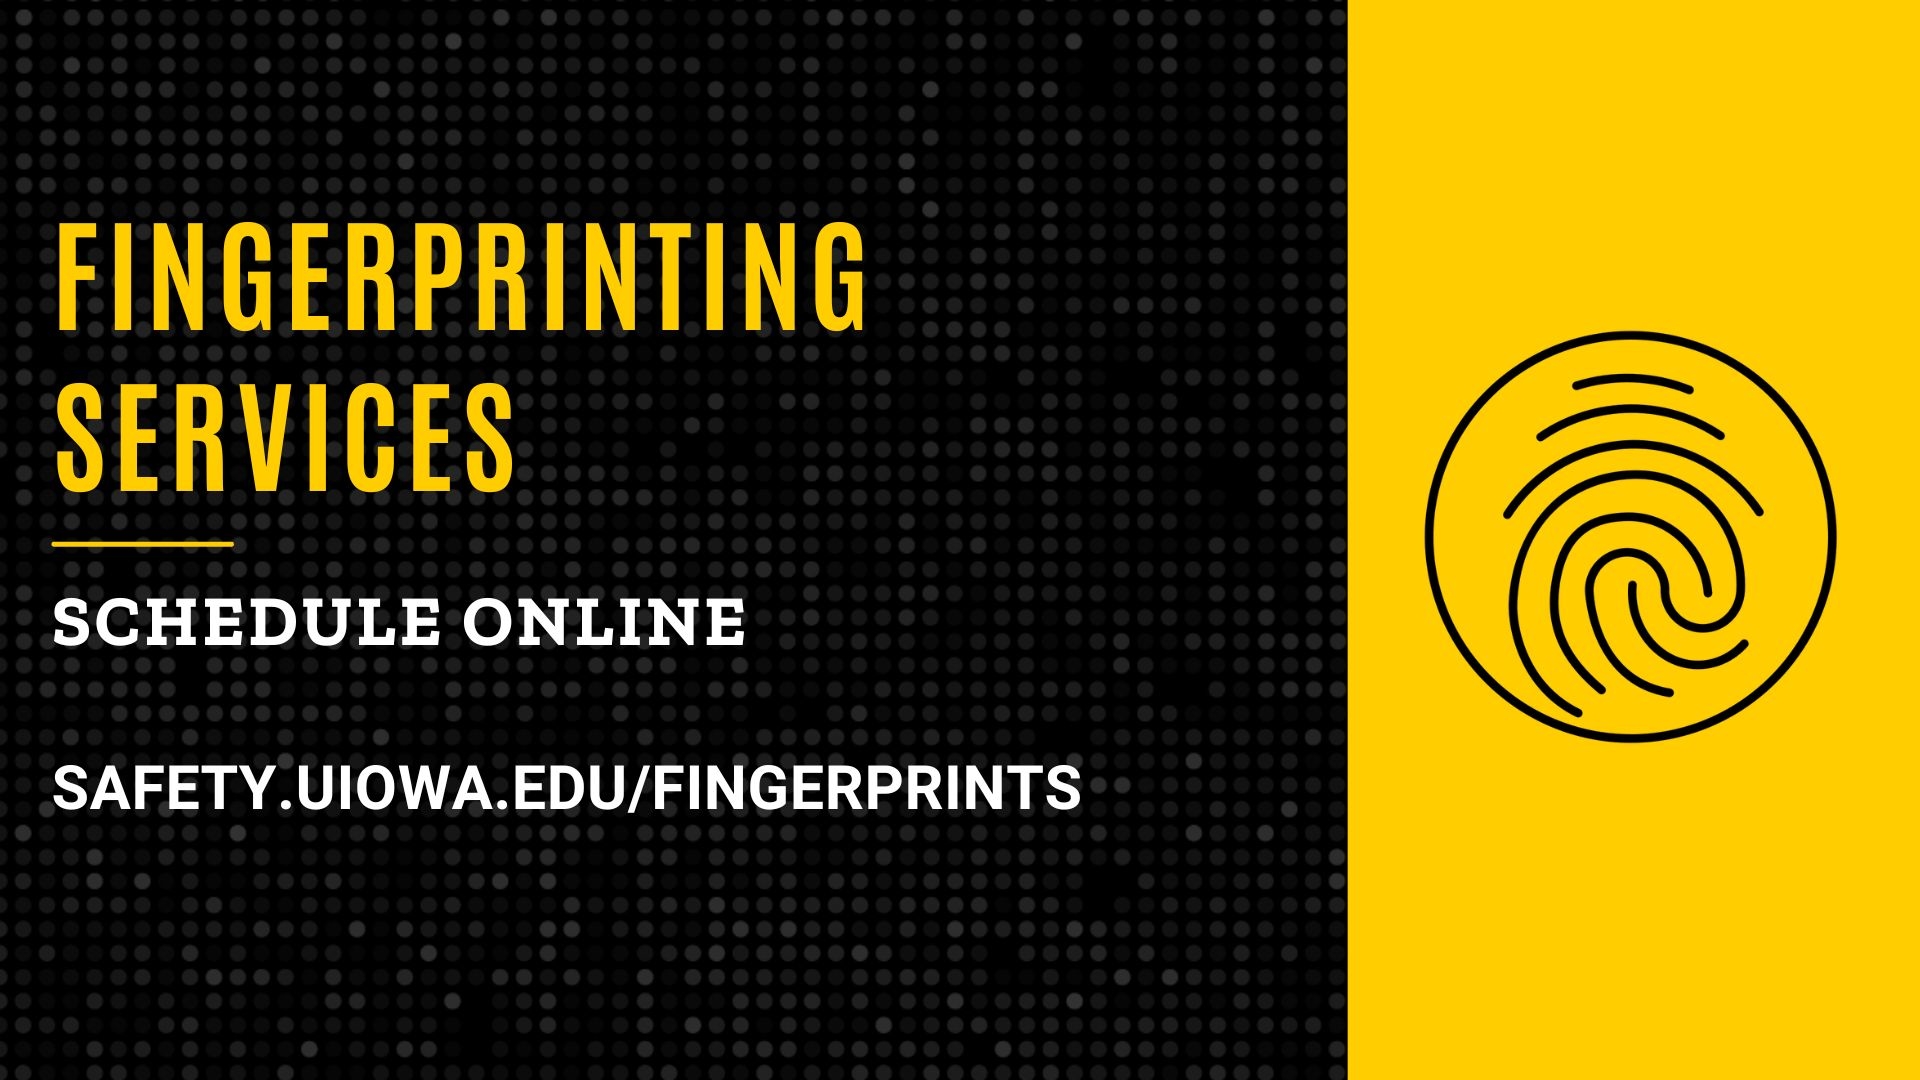 Schedule fingerprinting services online at safety.uiowa.edu/fingerprints